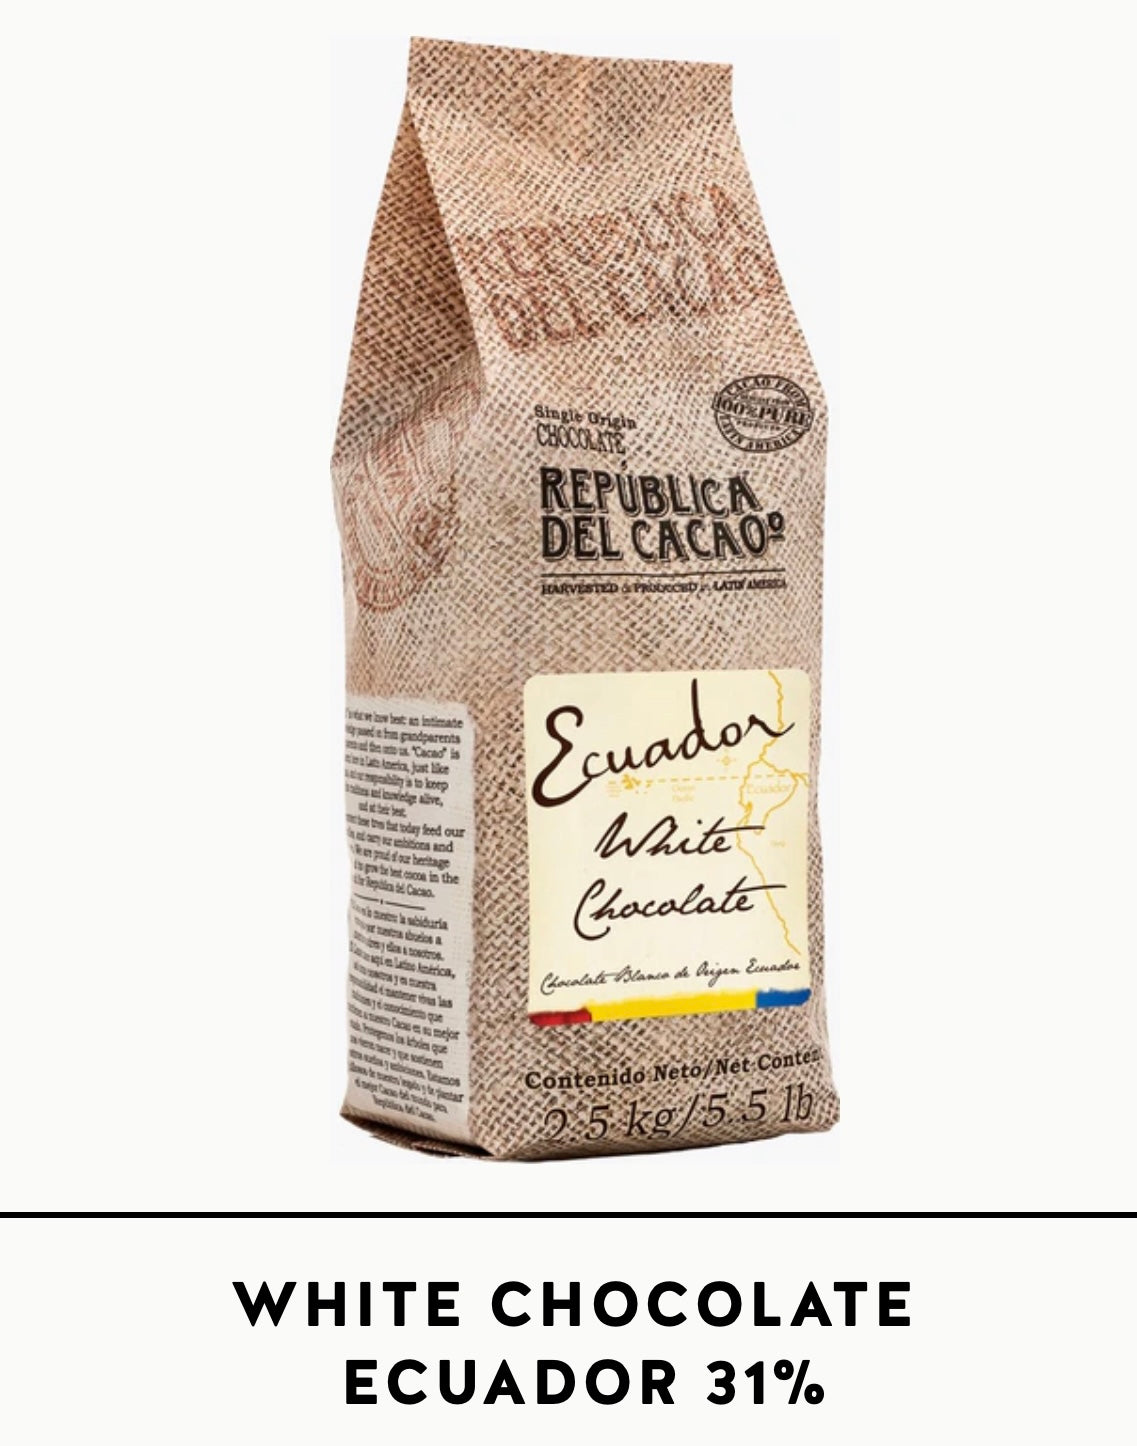 WHITE CHOCOLATE ECUADOR 31%